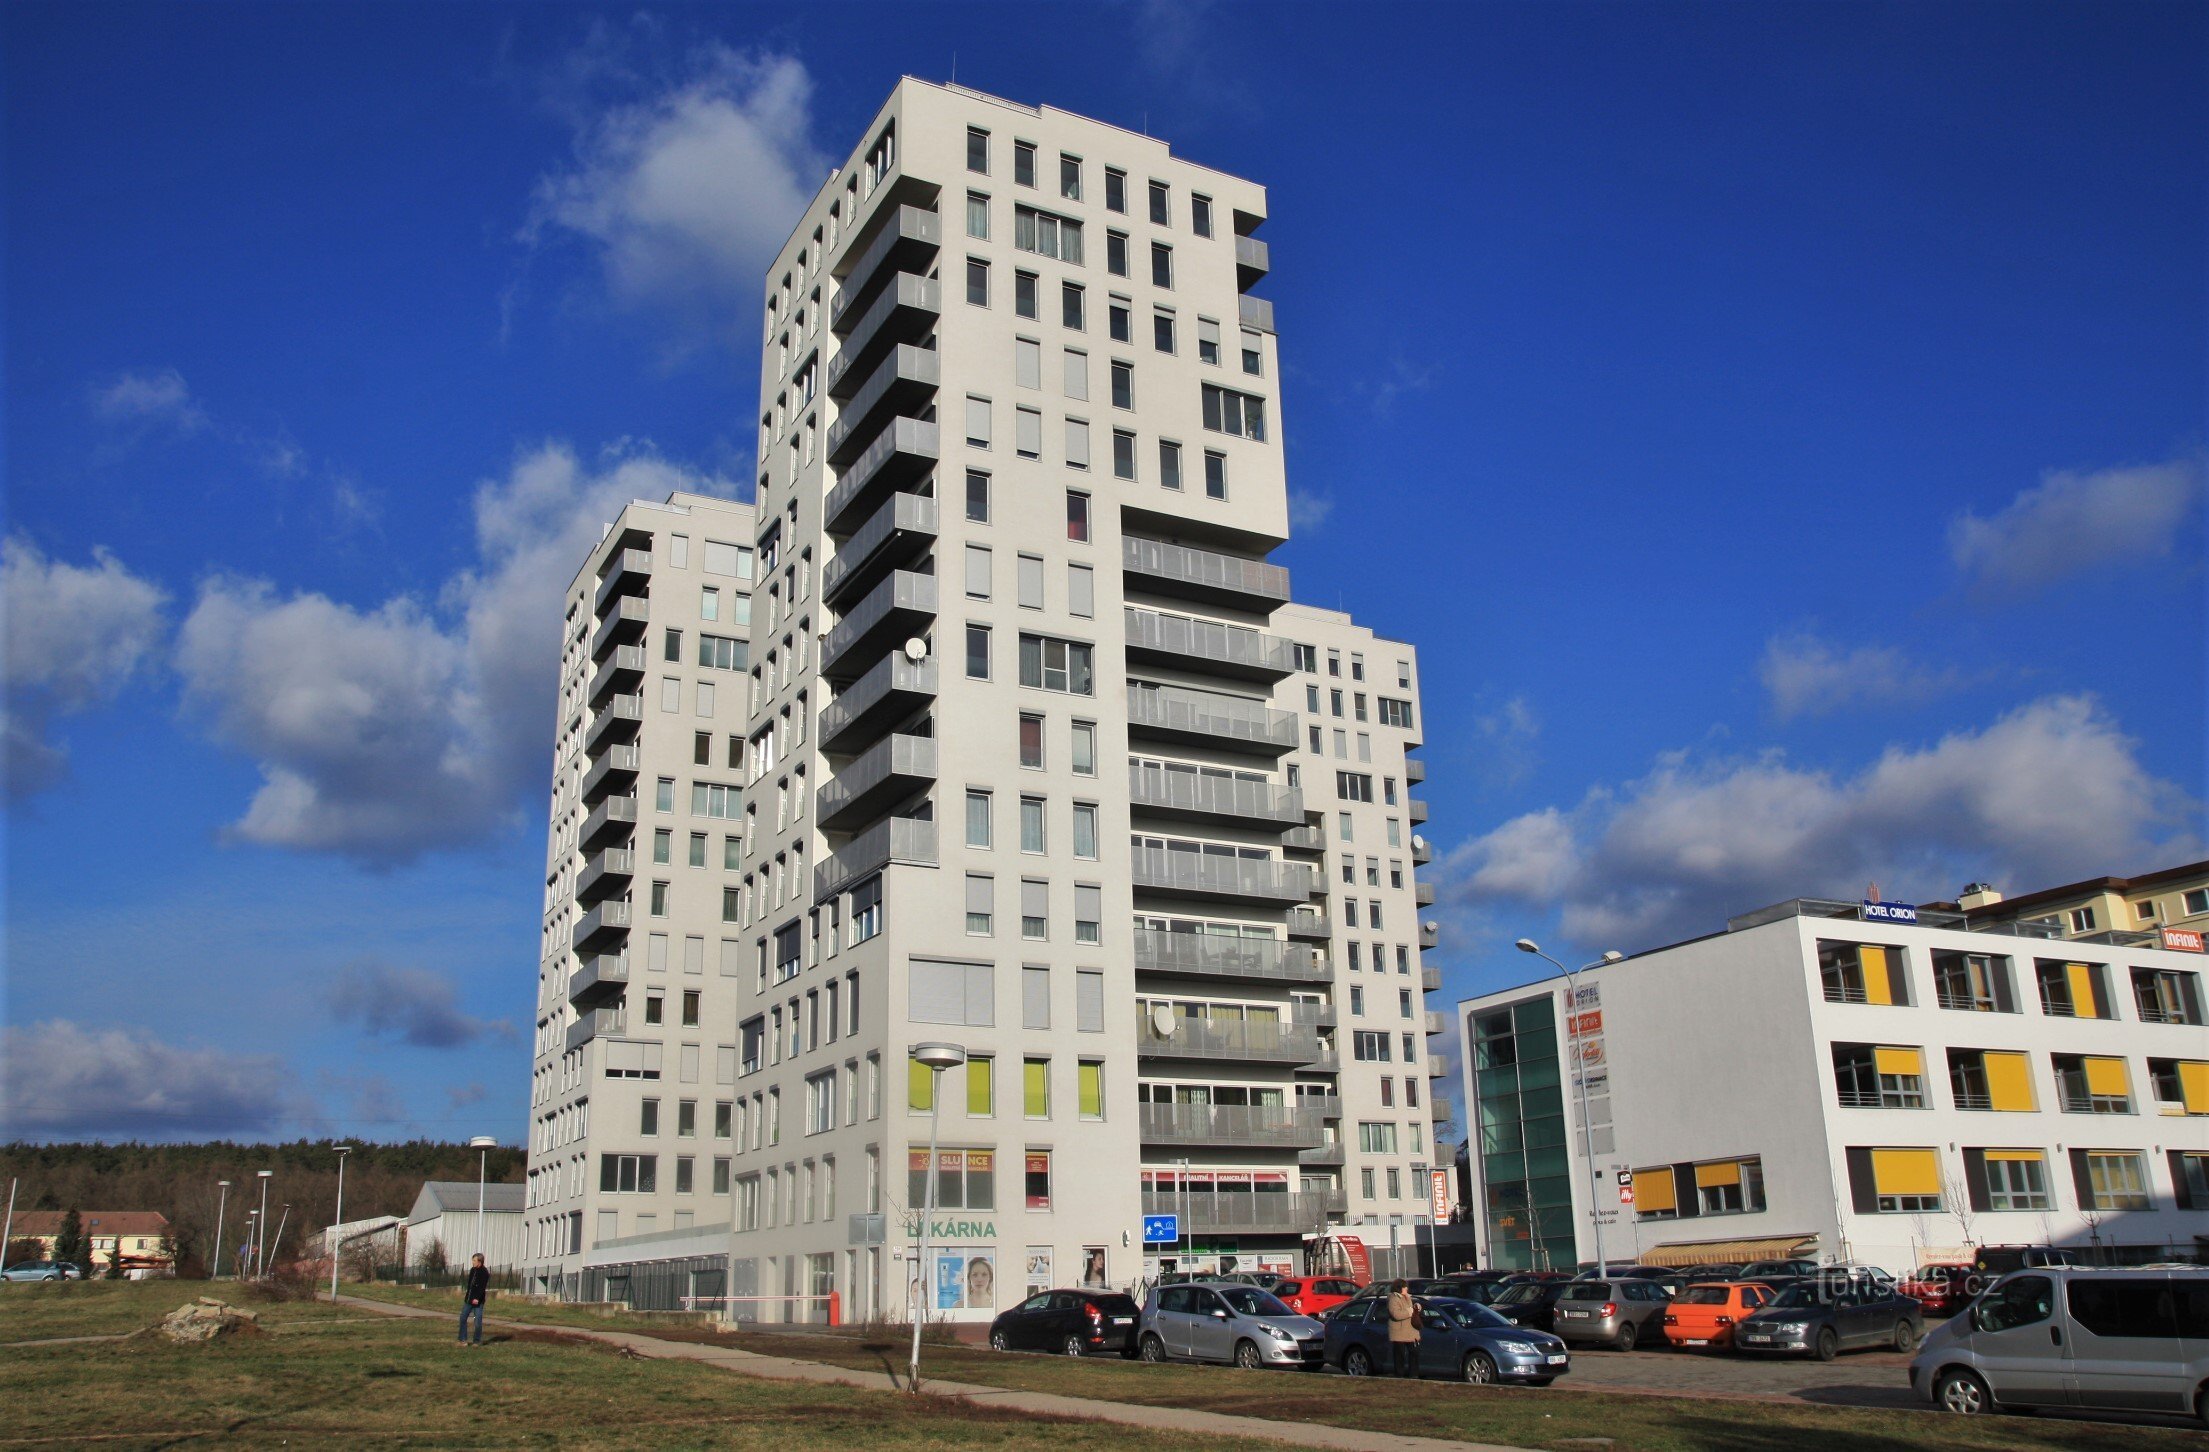 Lesná, clădiri înalte de pe Majdalenky